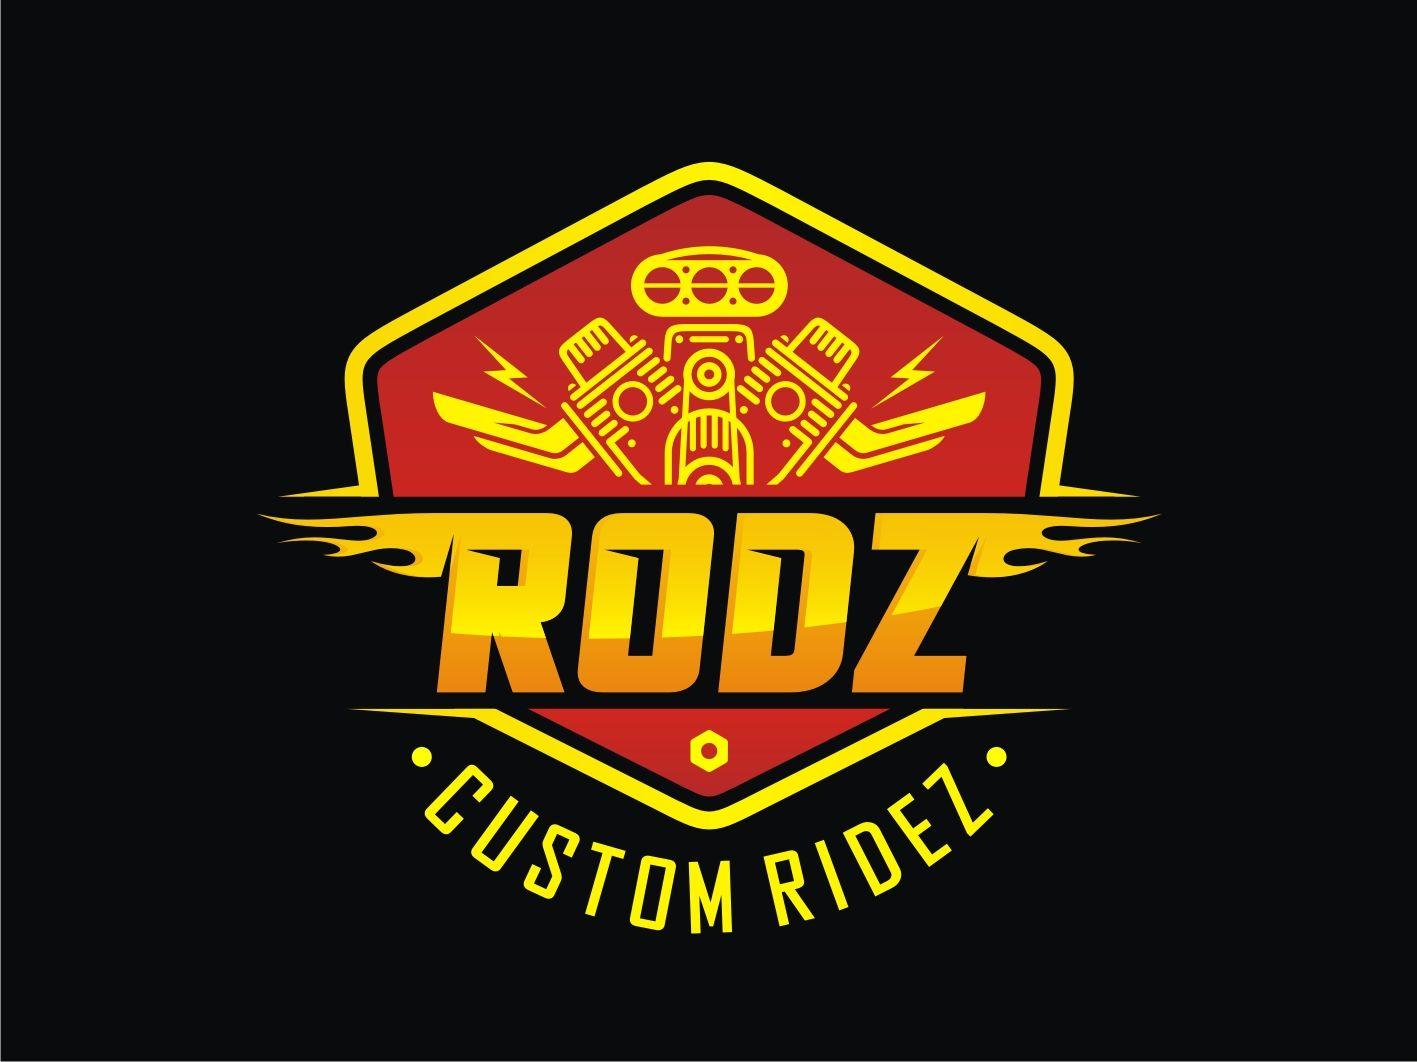 Cool Car Company Logo - Bold, Playful, Business Logo Design for Rodz Custom Ridez